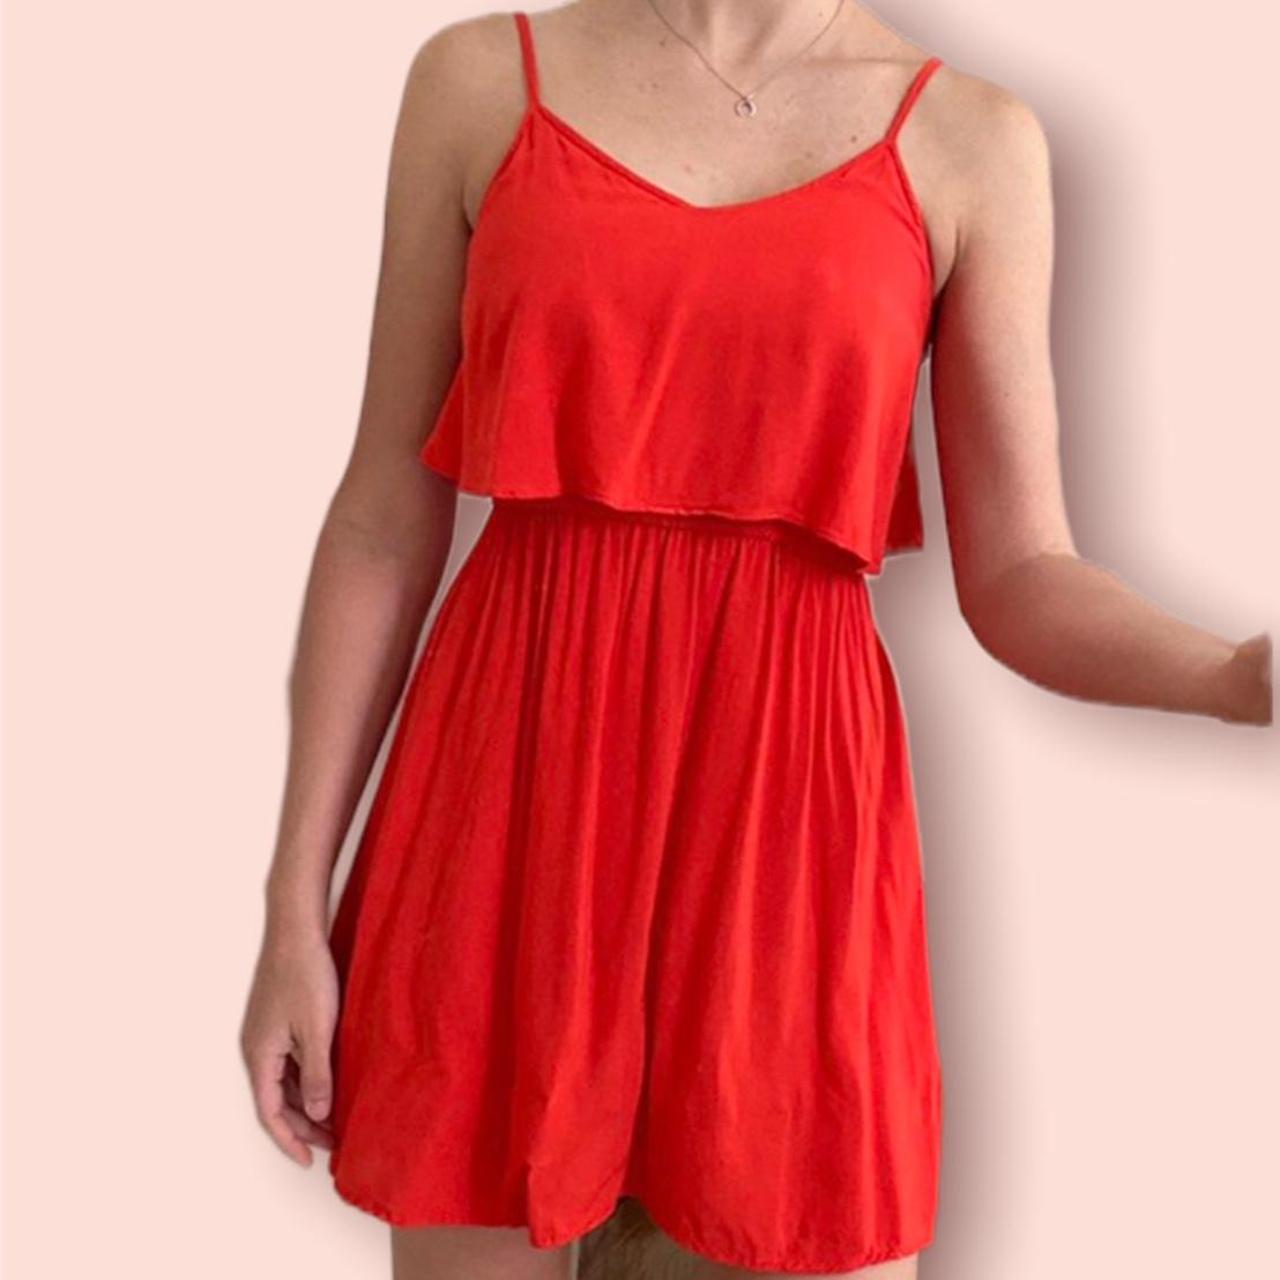 Product Image 1 - Red flowy mini dress. Adjustable